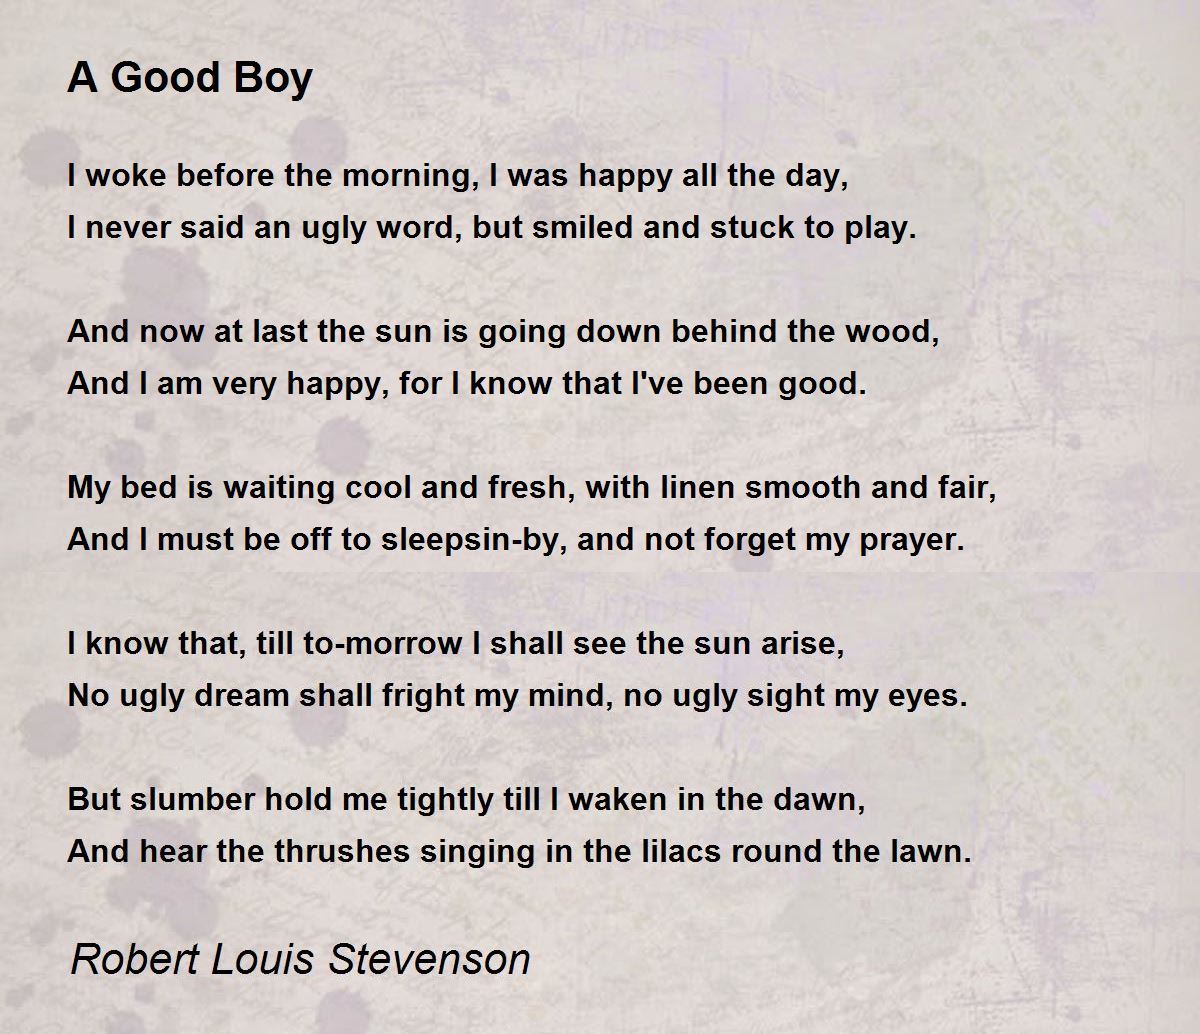 A Good Boy Poem by Robert Louis Stevenson - Poem Hunter